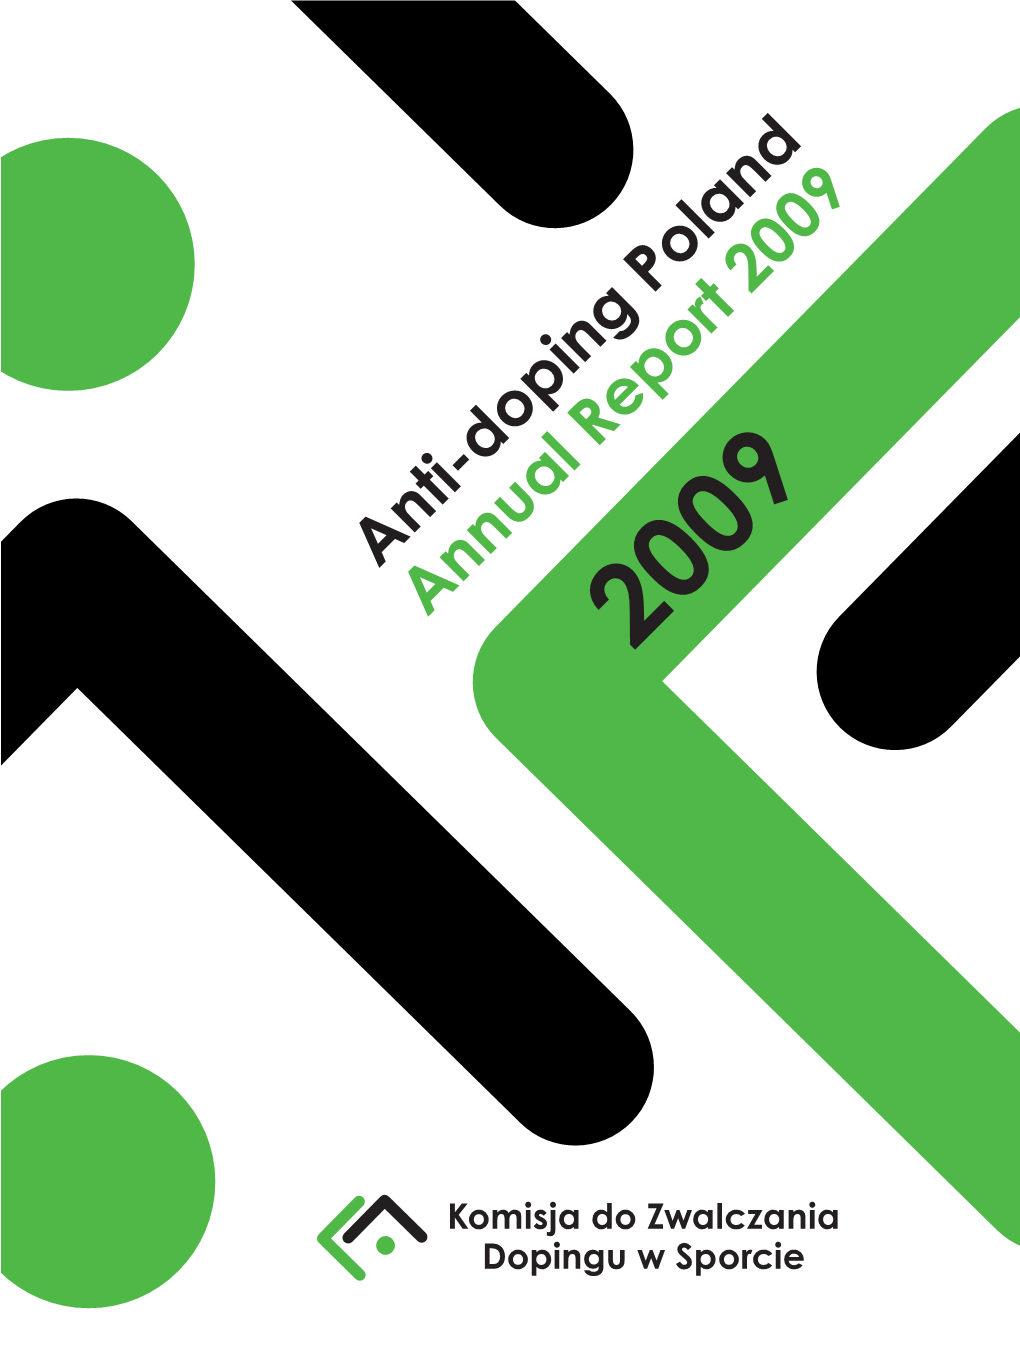 Annual Report 2009 Anti-Doping Poland